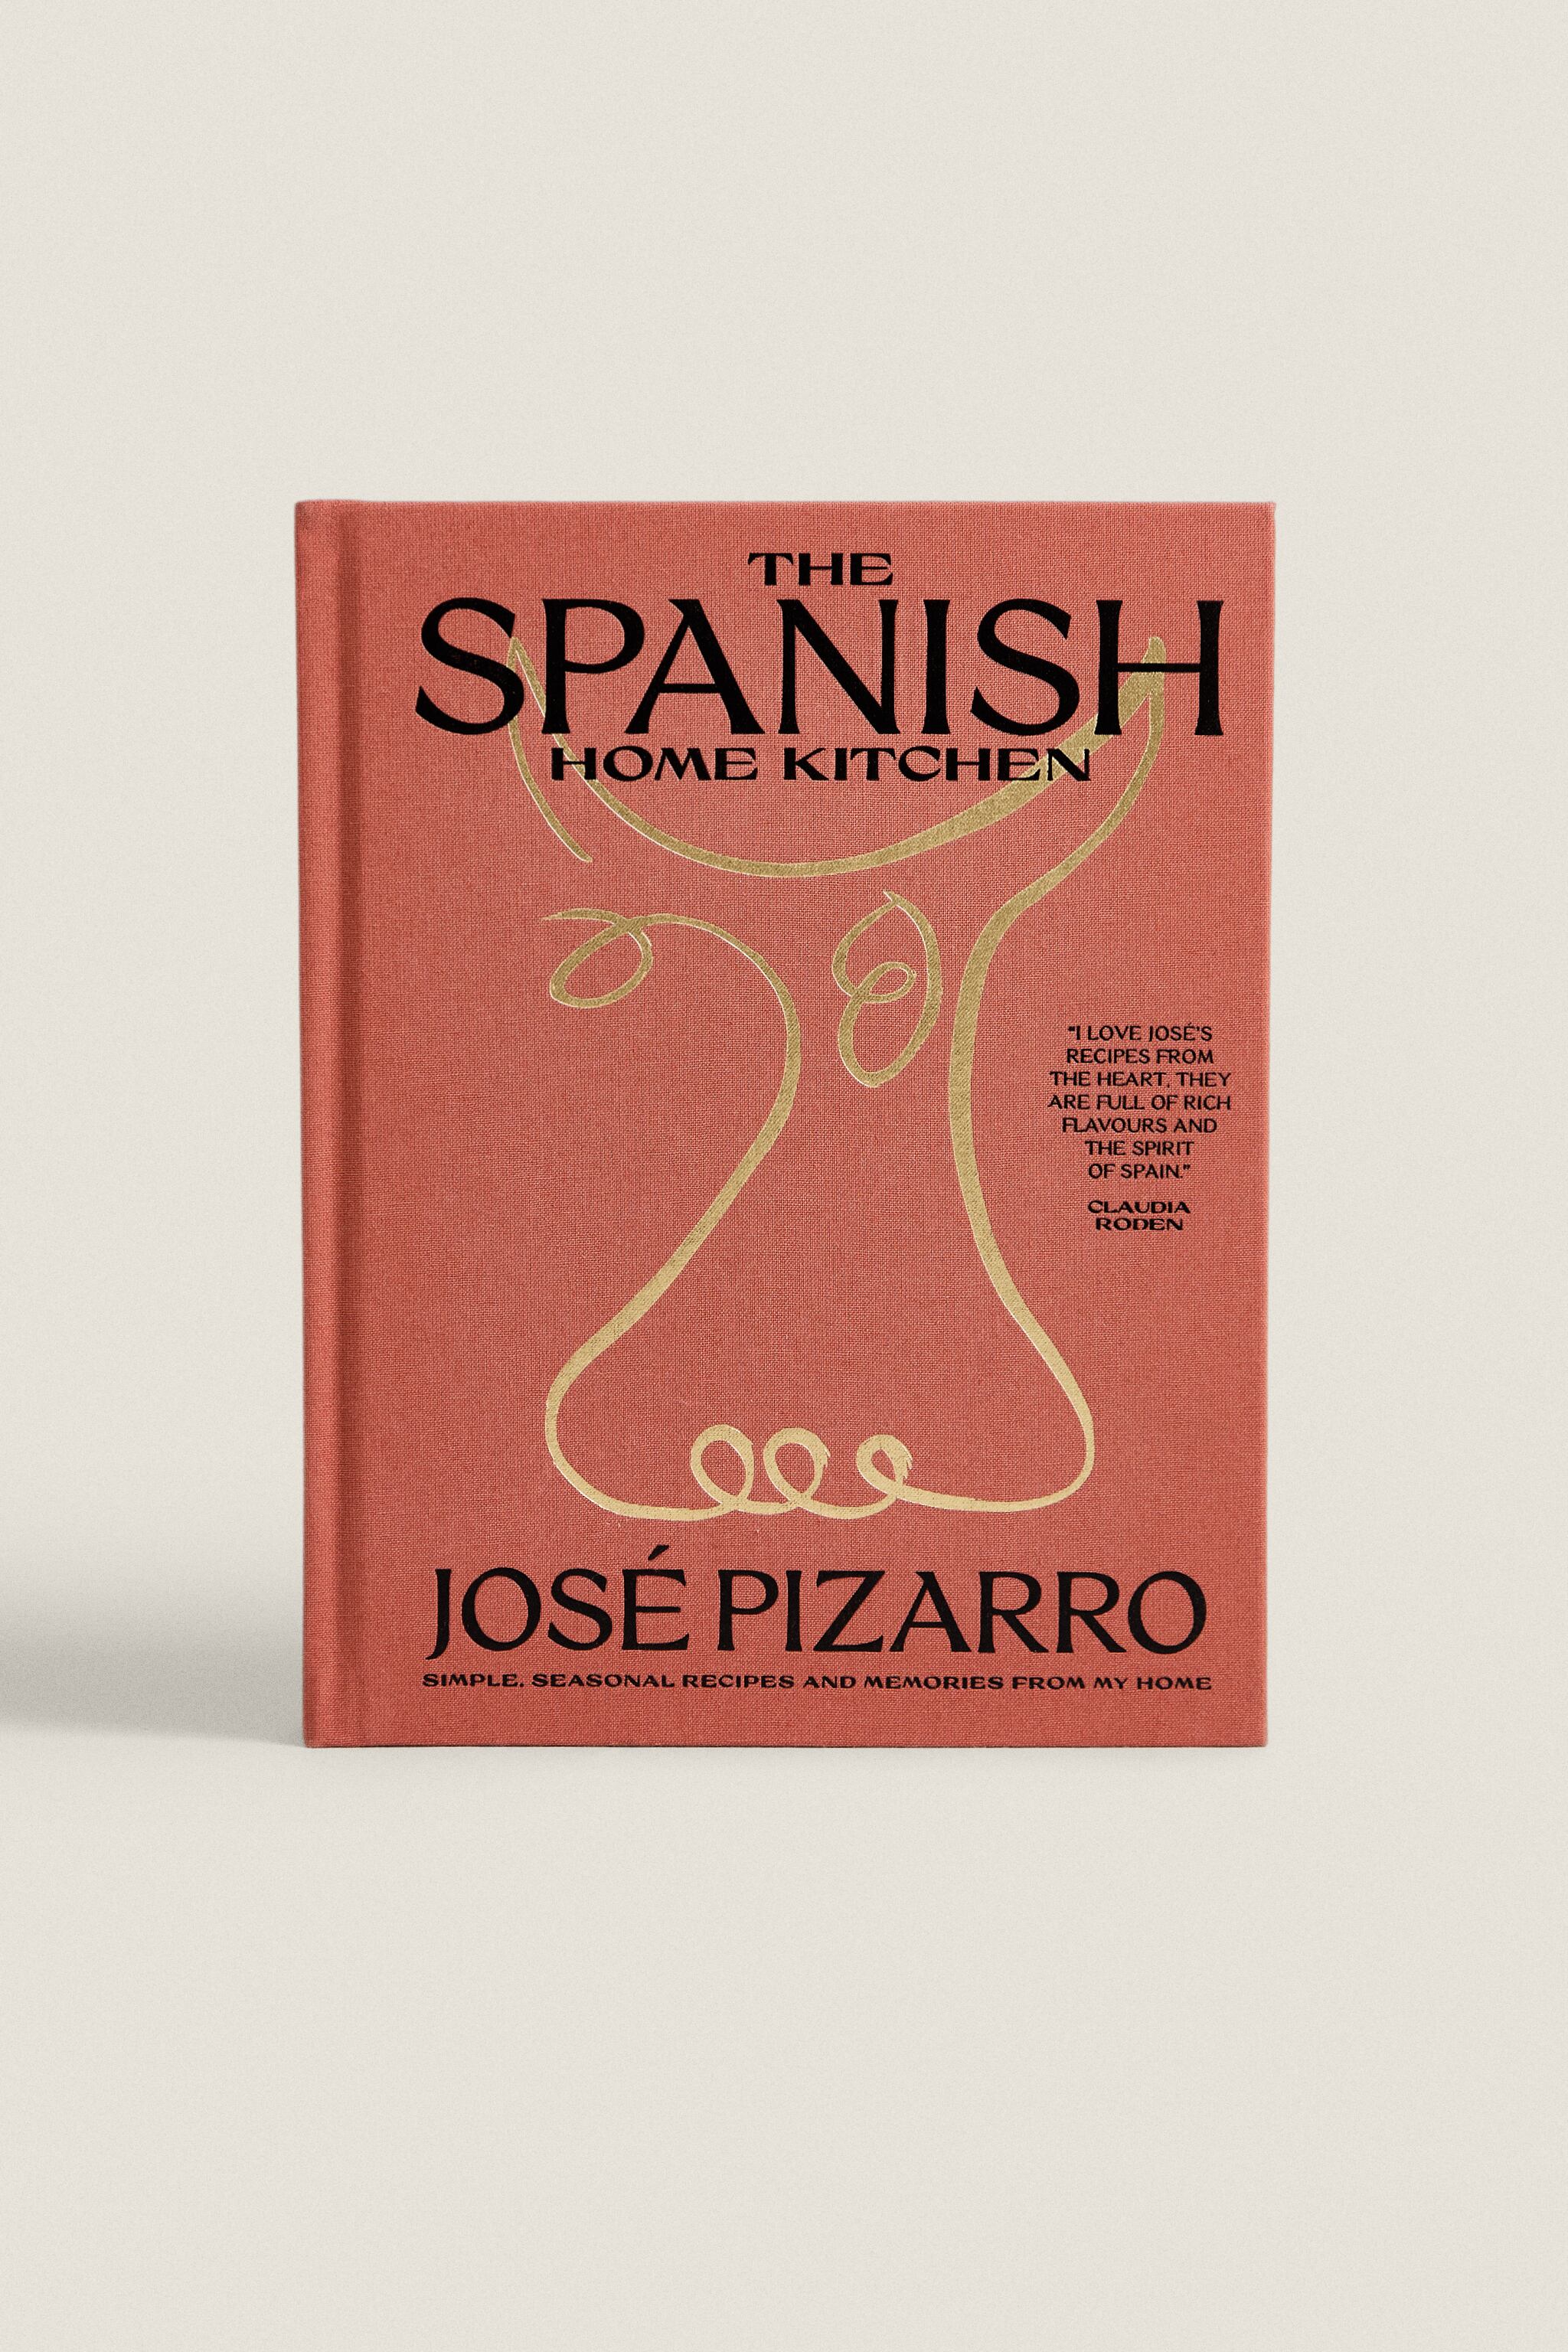 THE SPANISH HOME KITCHEN BOOK